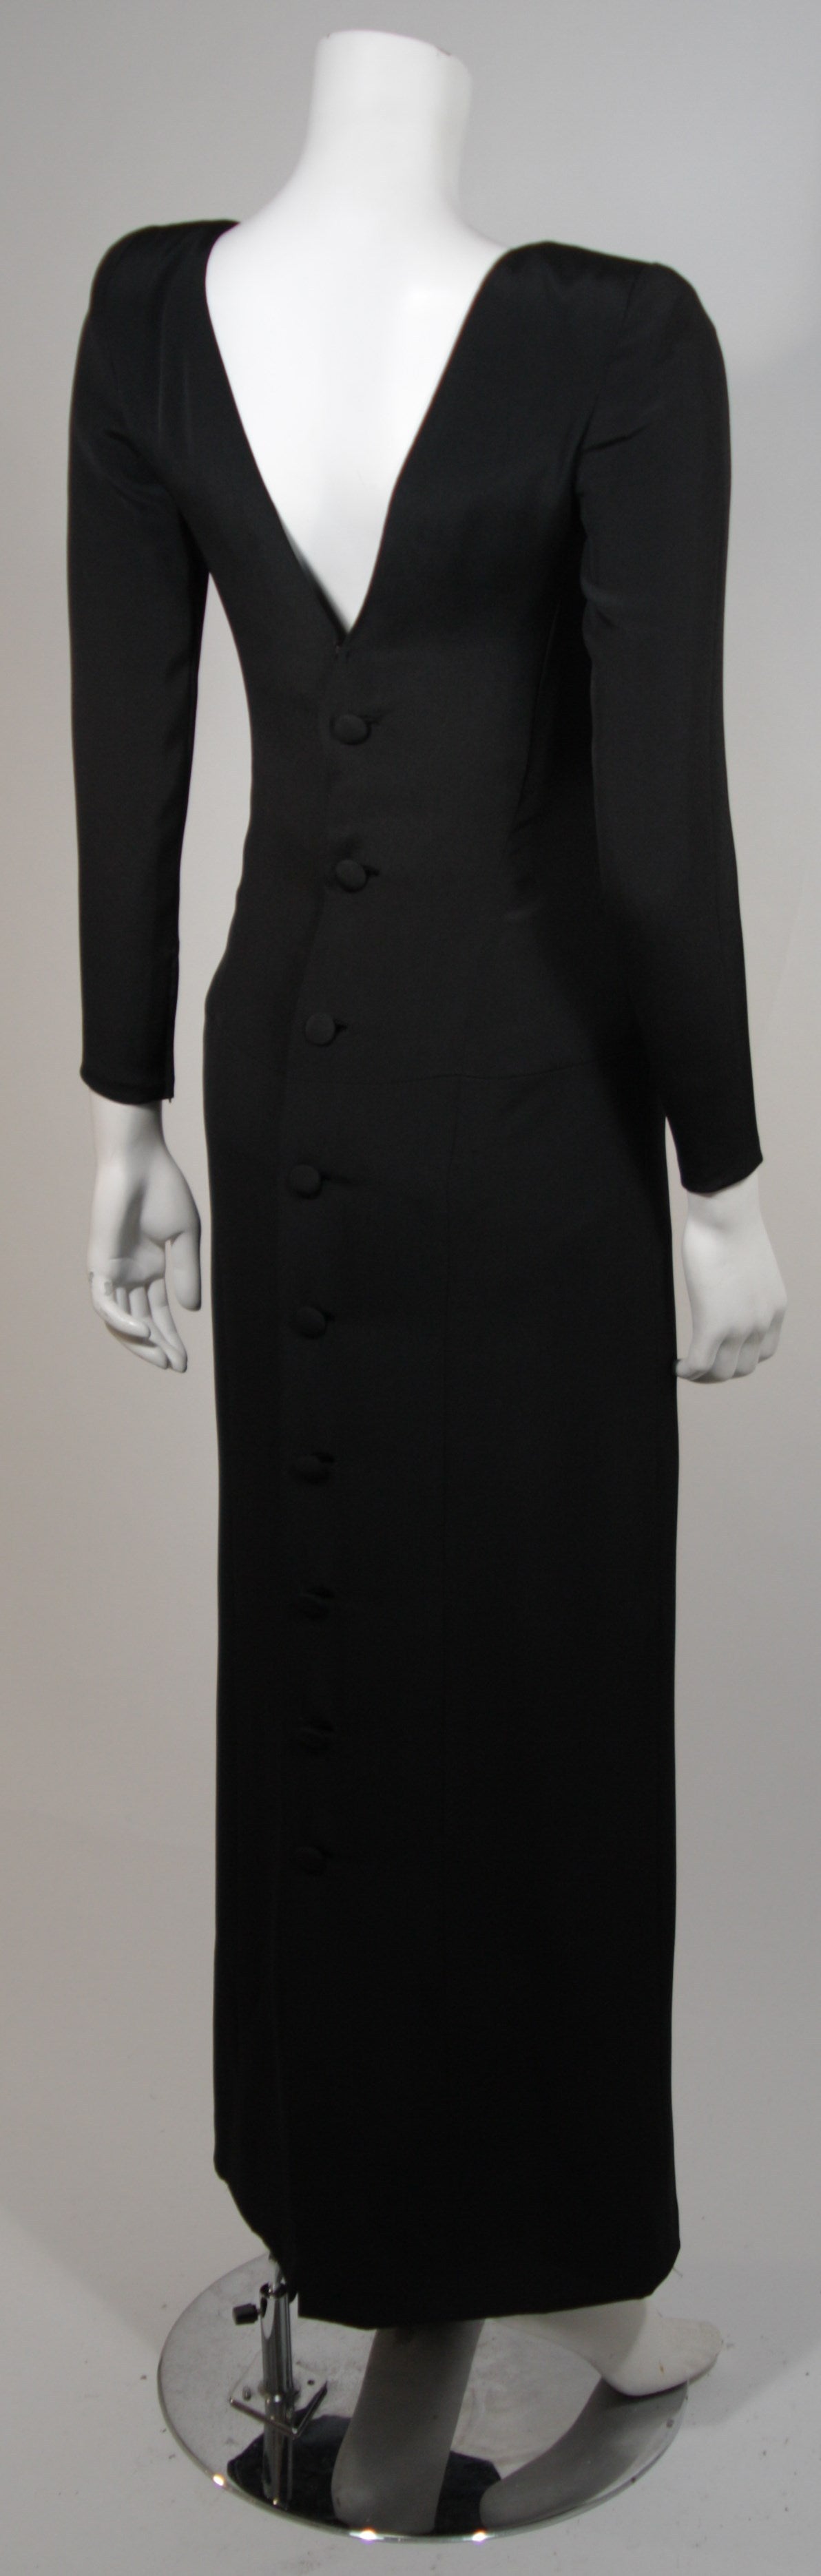 Women's Chanel Haute Couture Black Silk Long Sleeve Gown Size 2-4 EU 34